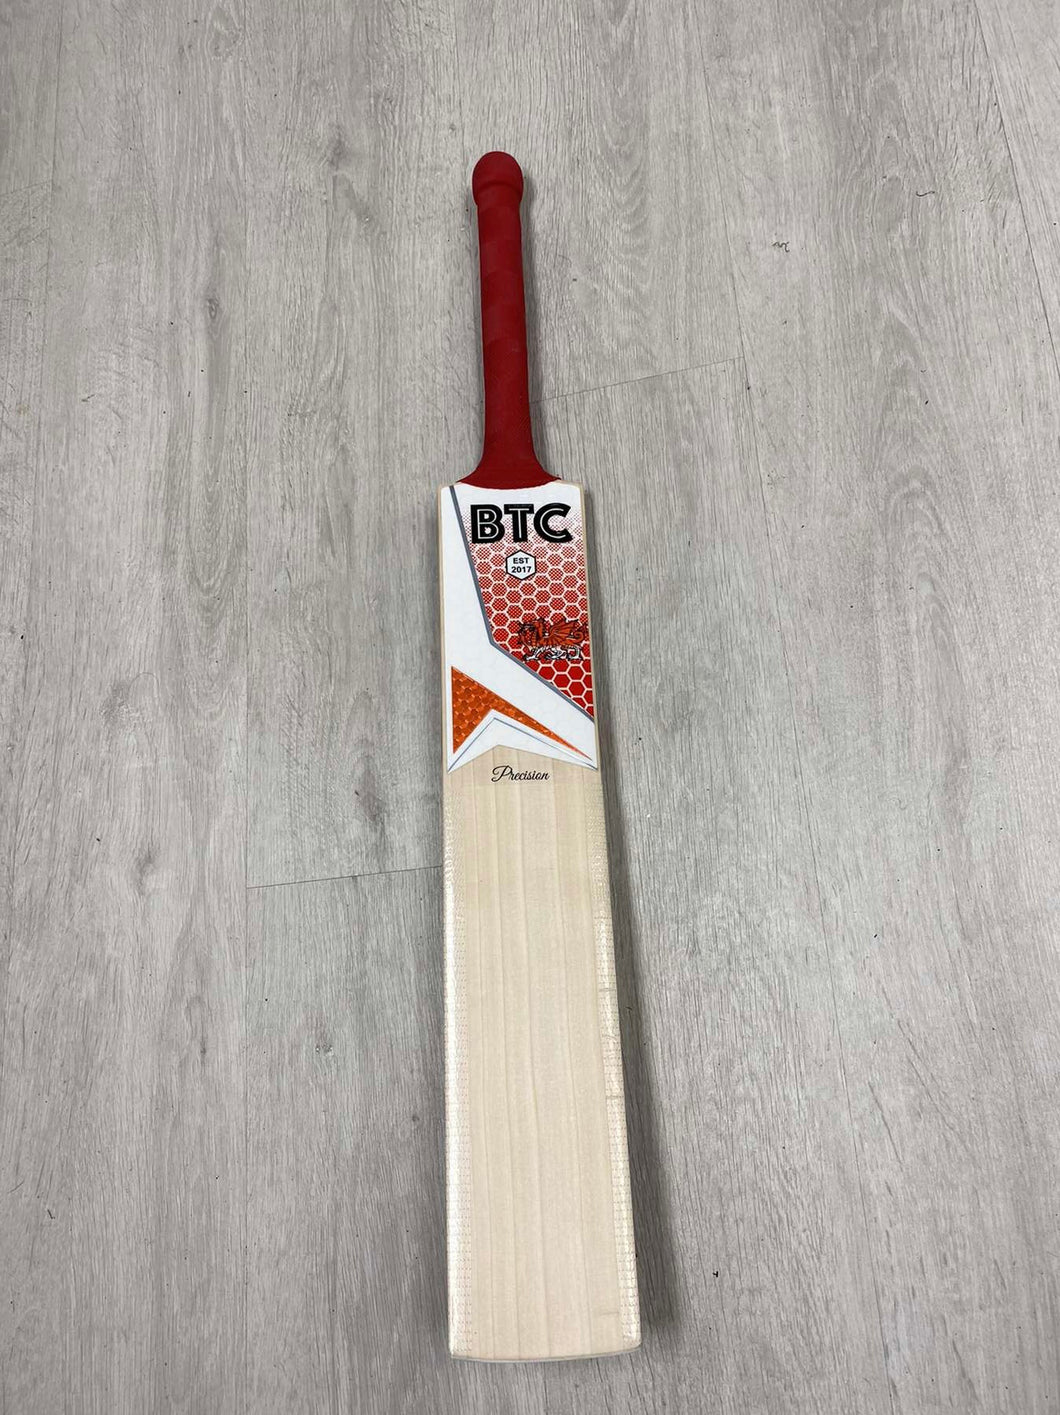 BTC Wales Size 5 Precision Bat 2